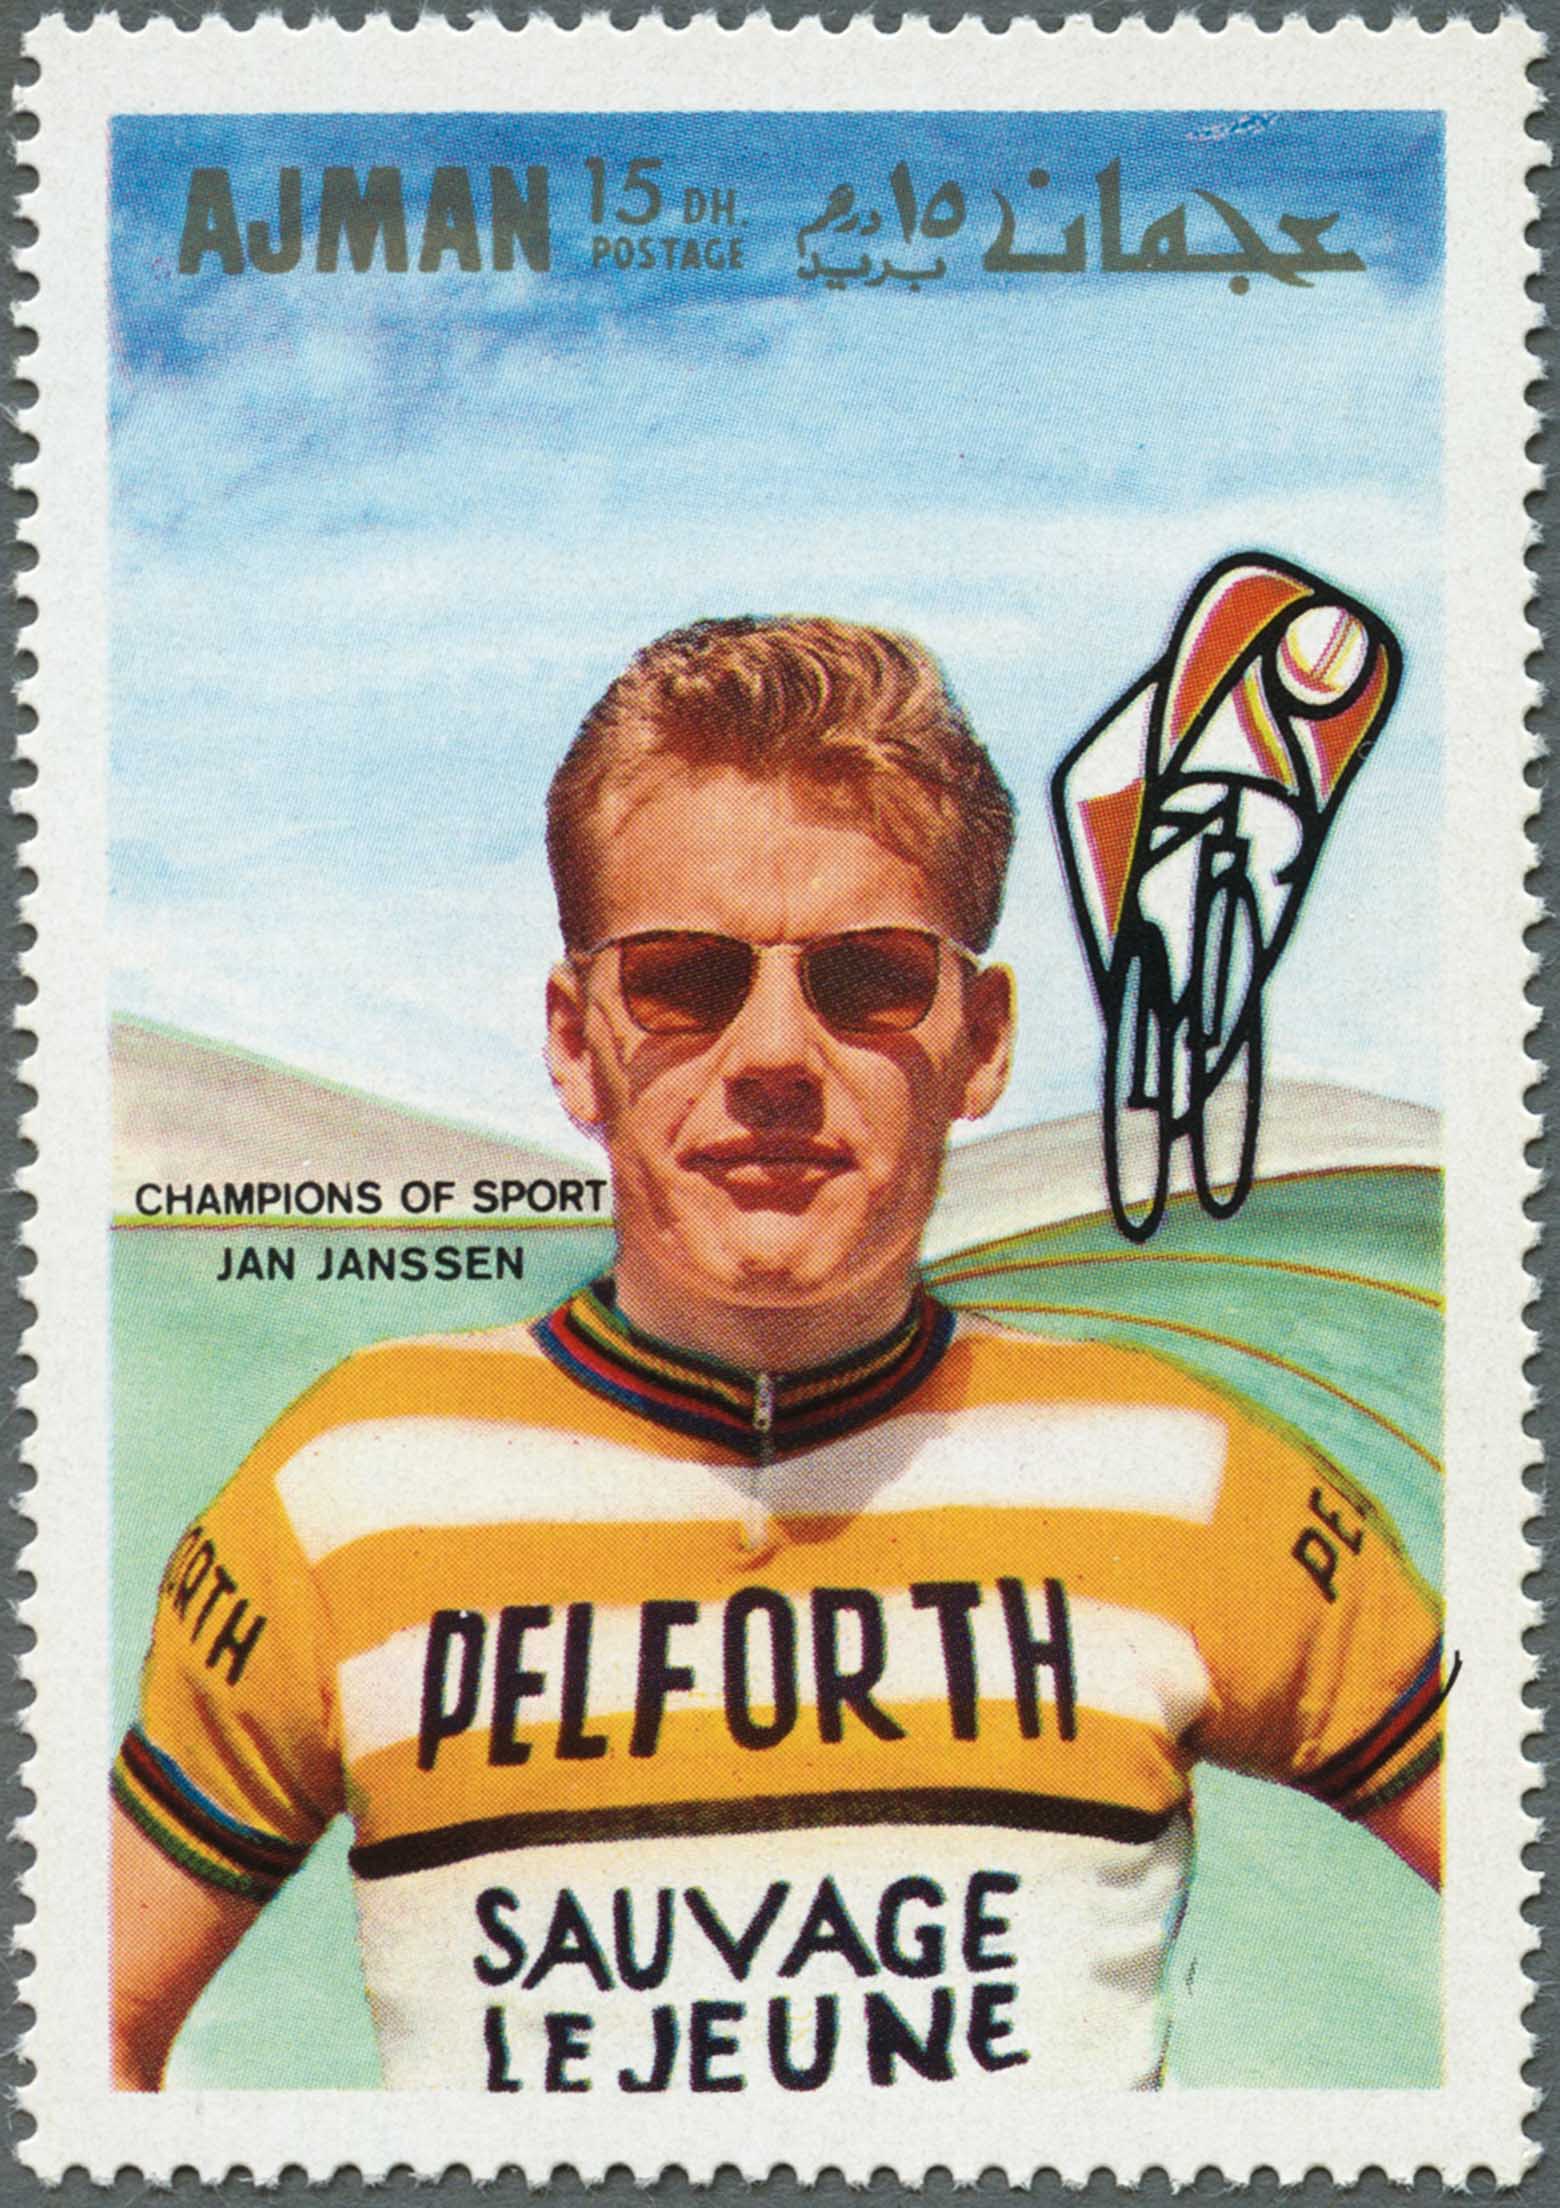 Jan Janssen - Ajman postage stamp main image